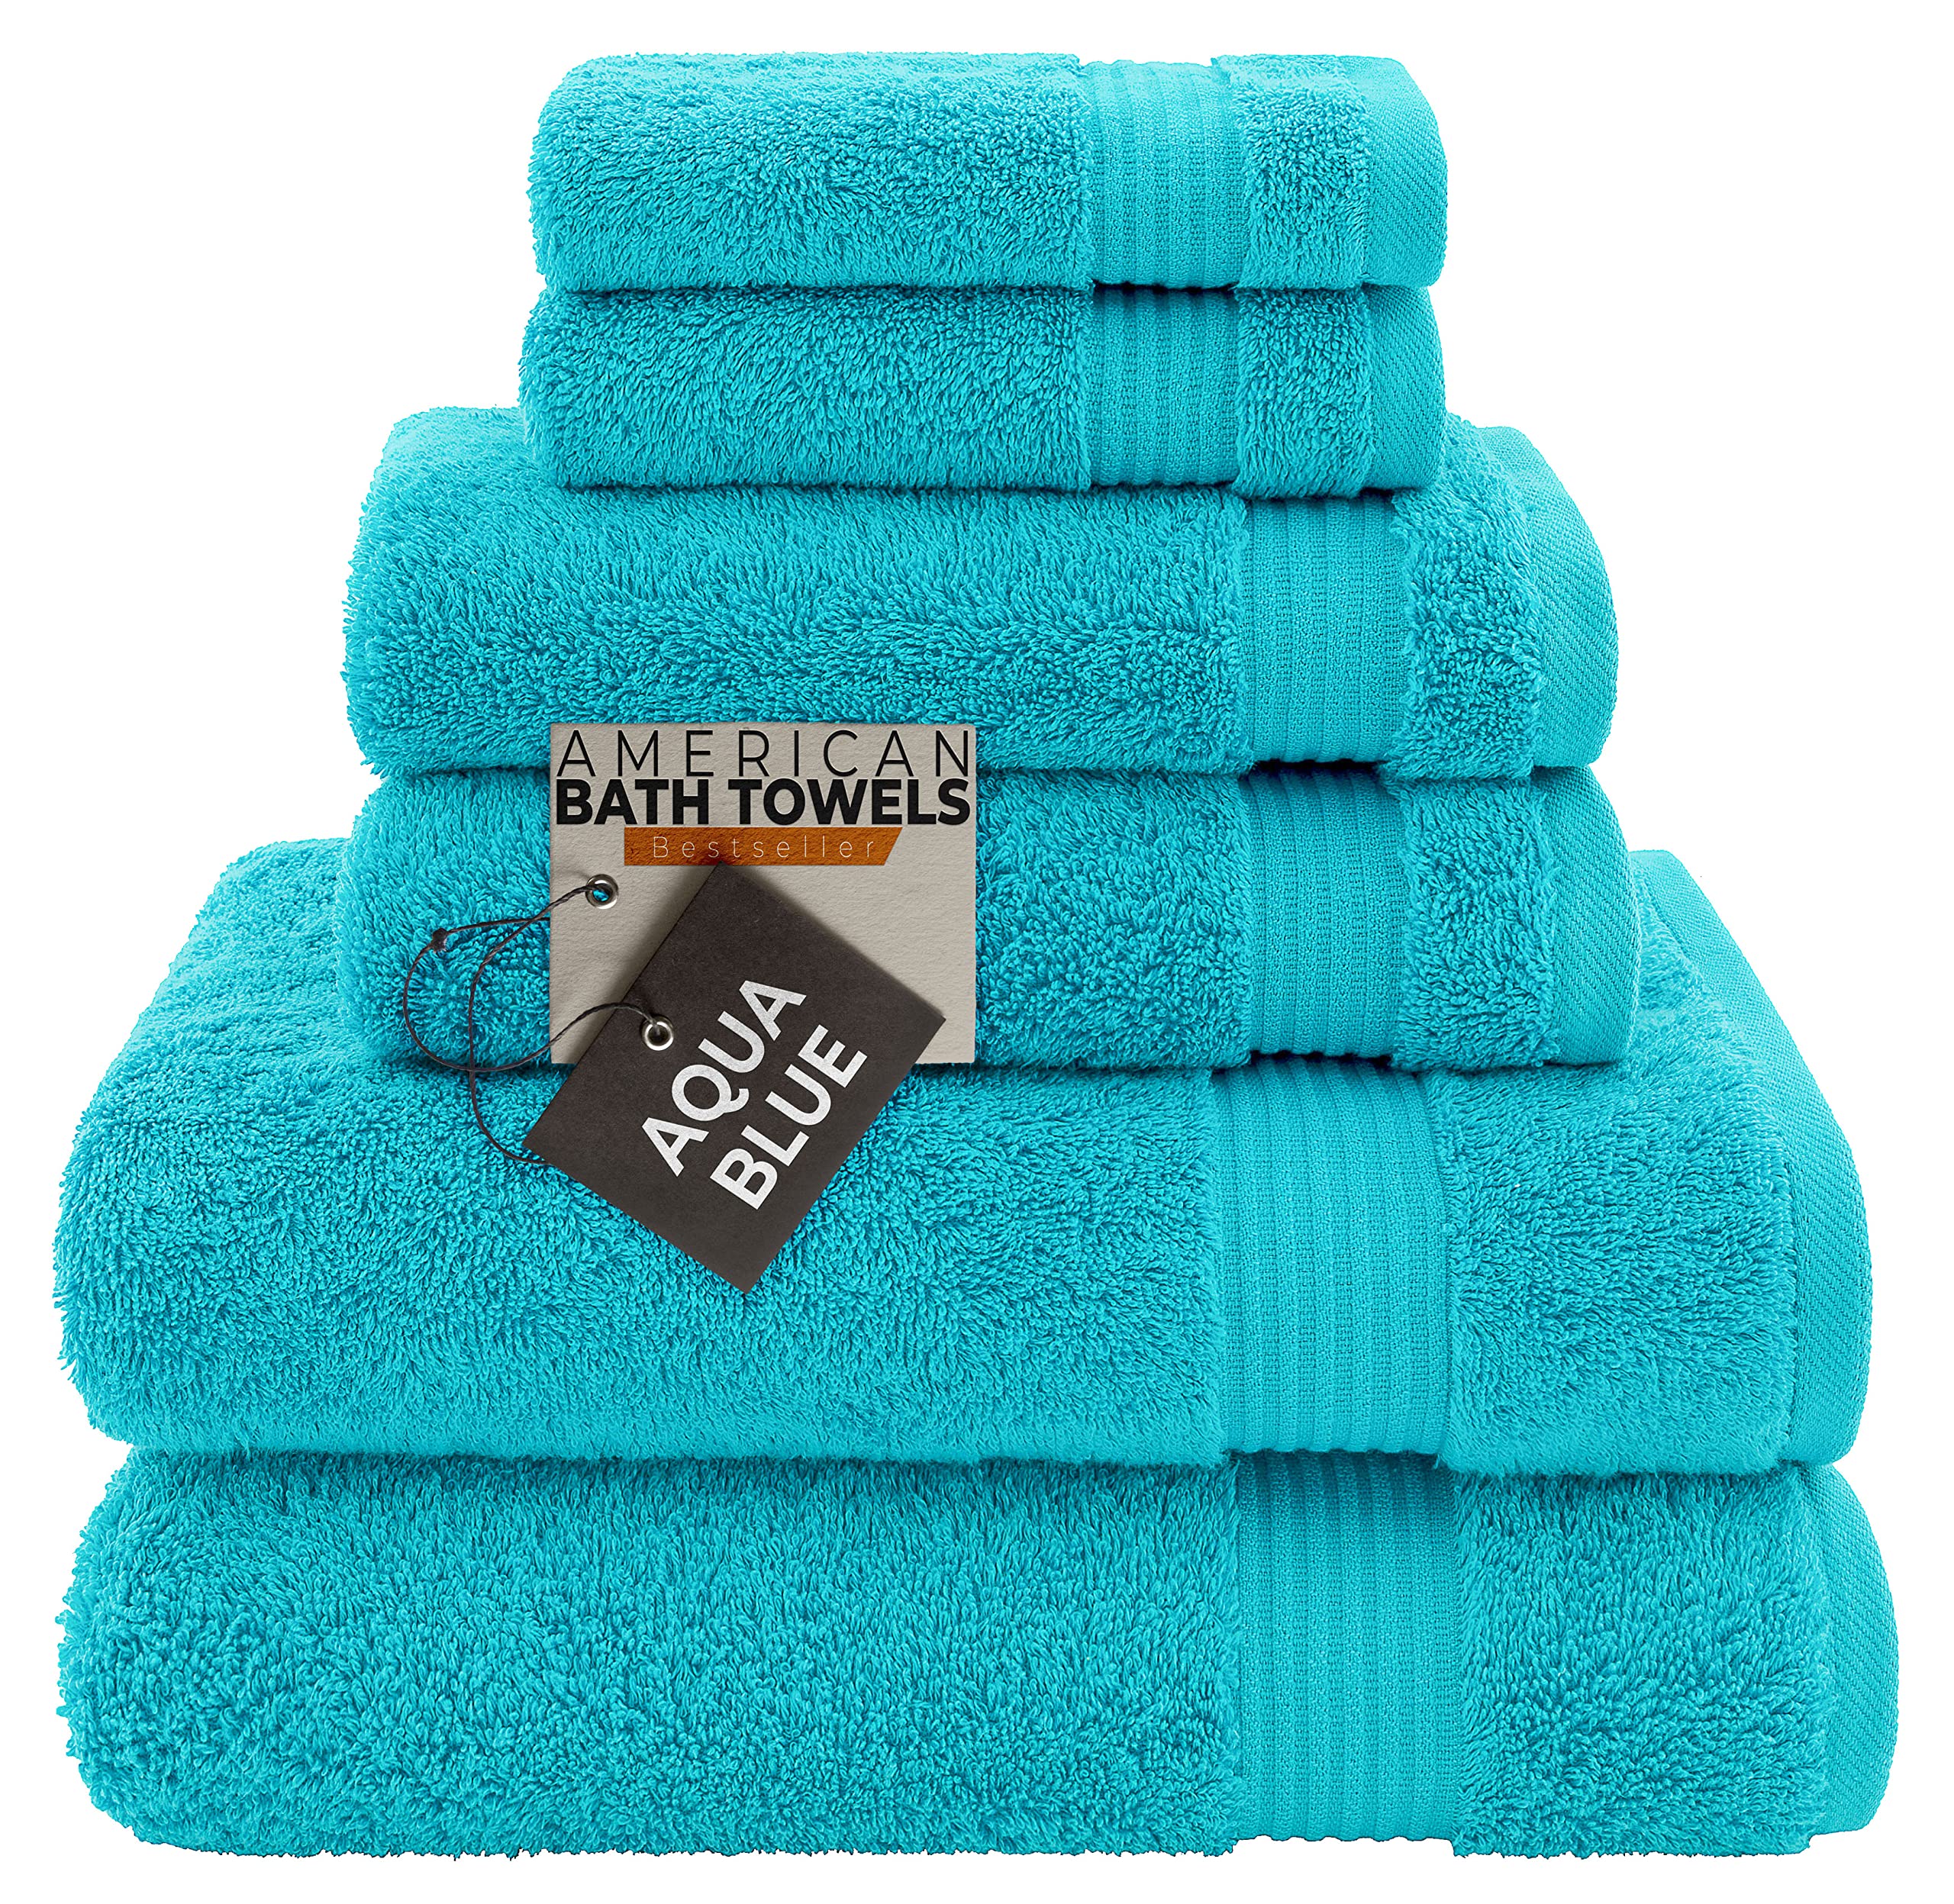 Premium 100% Cotton Bath Towel Set;1 Bath Towels,1 Hand Towel & 1 Washcloth,Luxury Bathroom Super Soft and Highly Absorbent,Hotel & Spa Quality